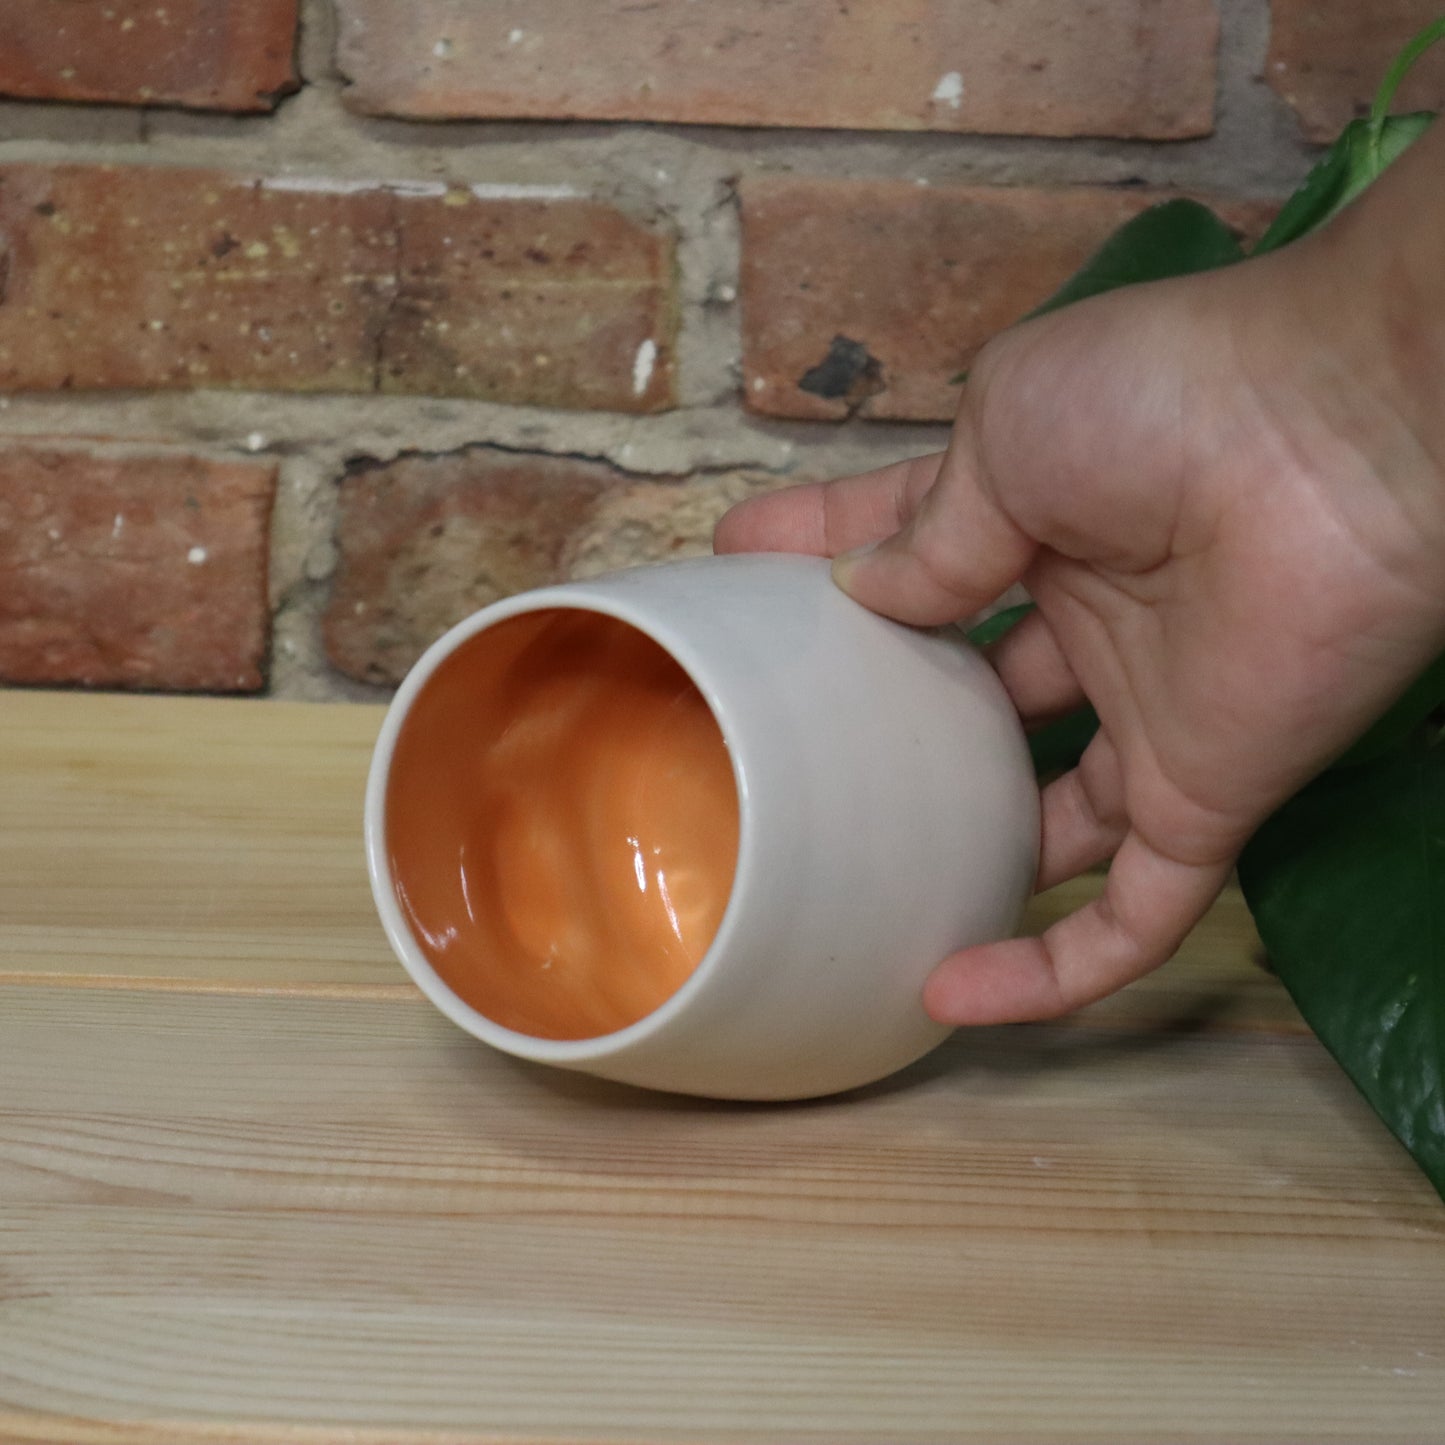 boobie cup (tangerine)